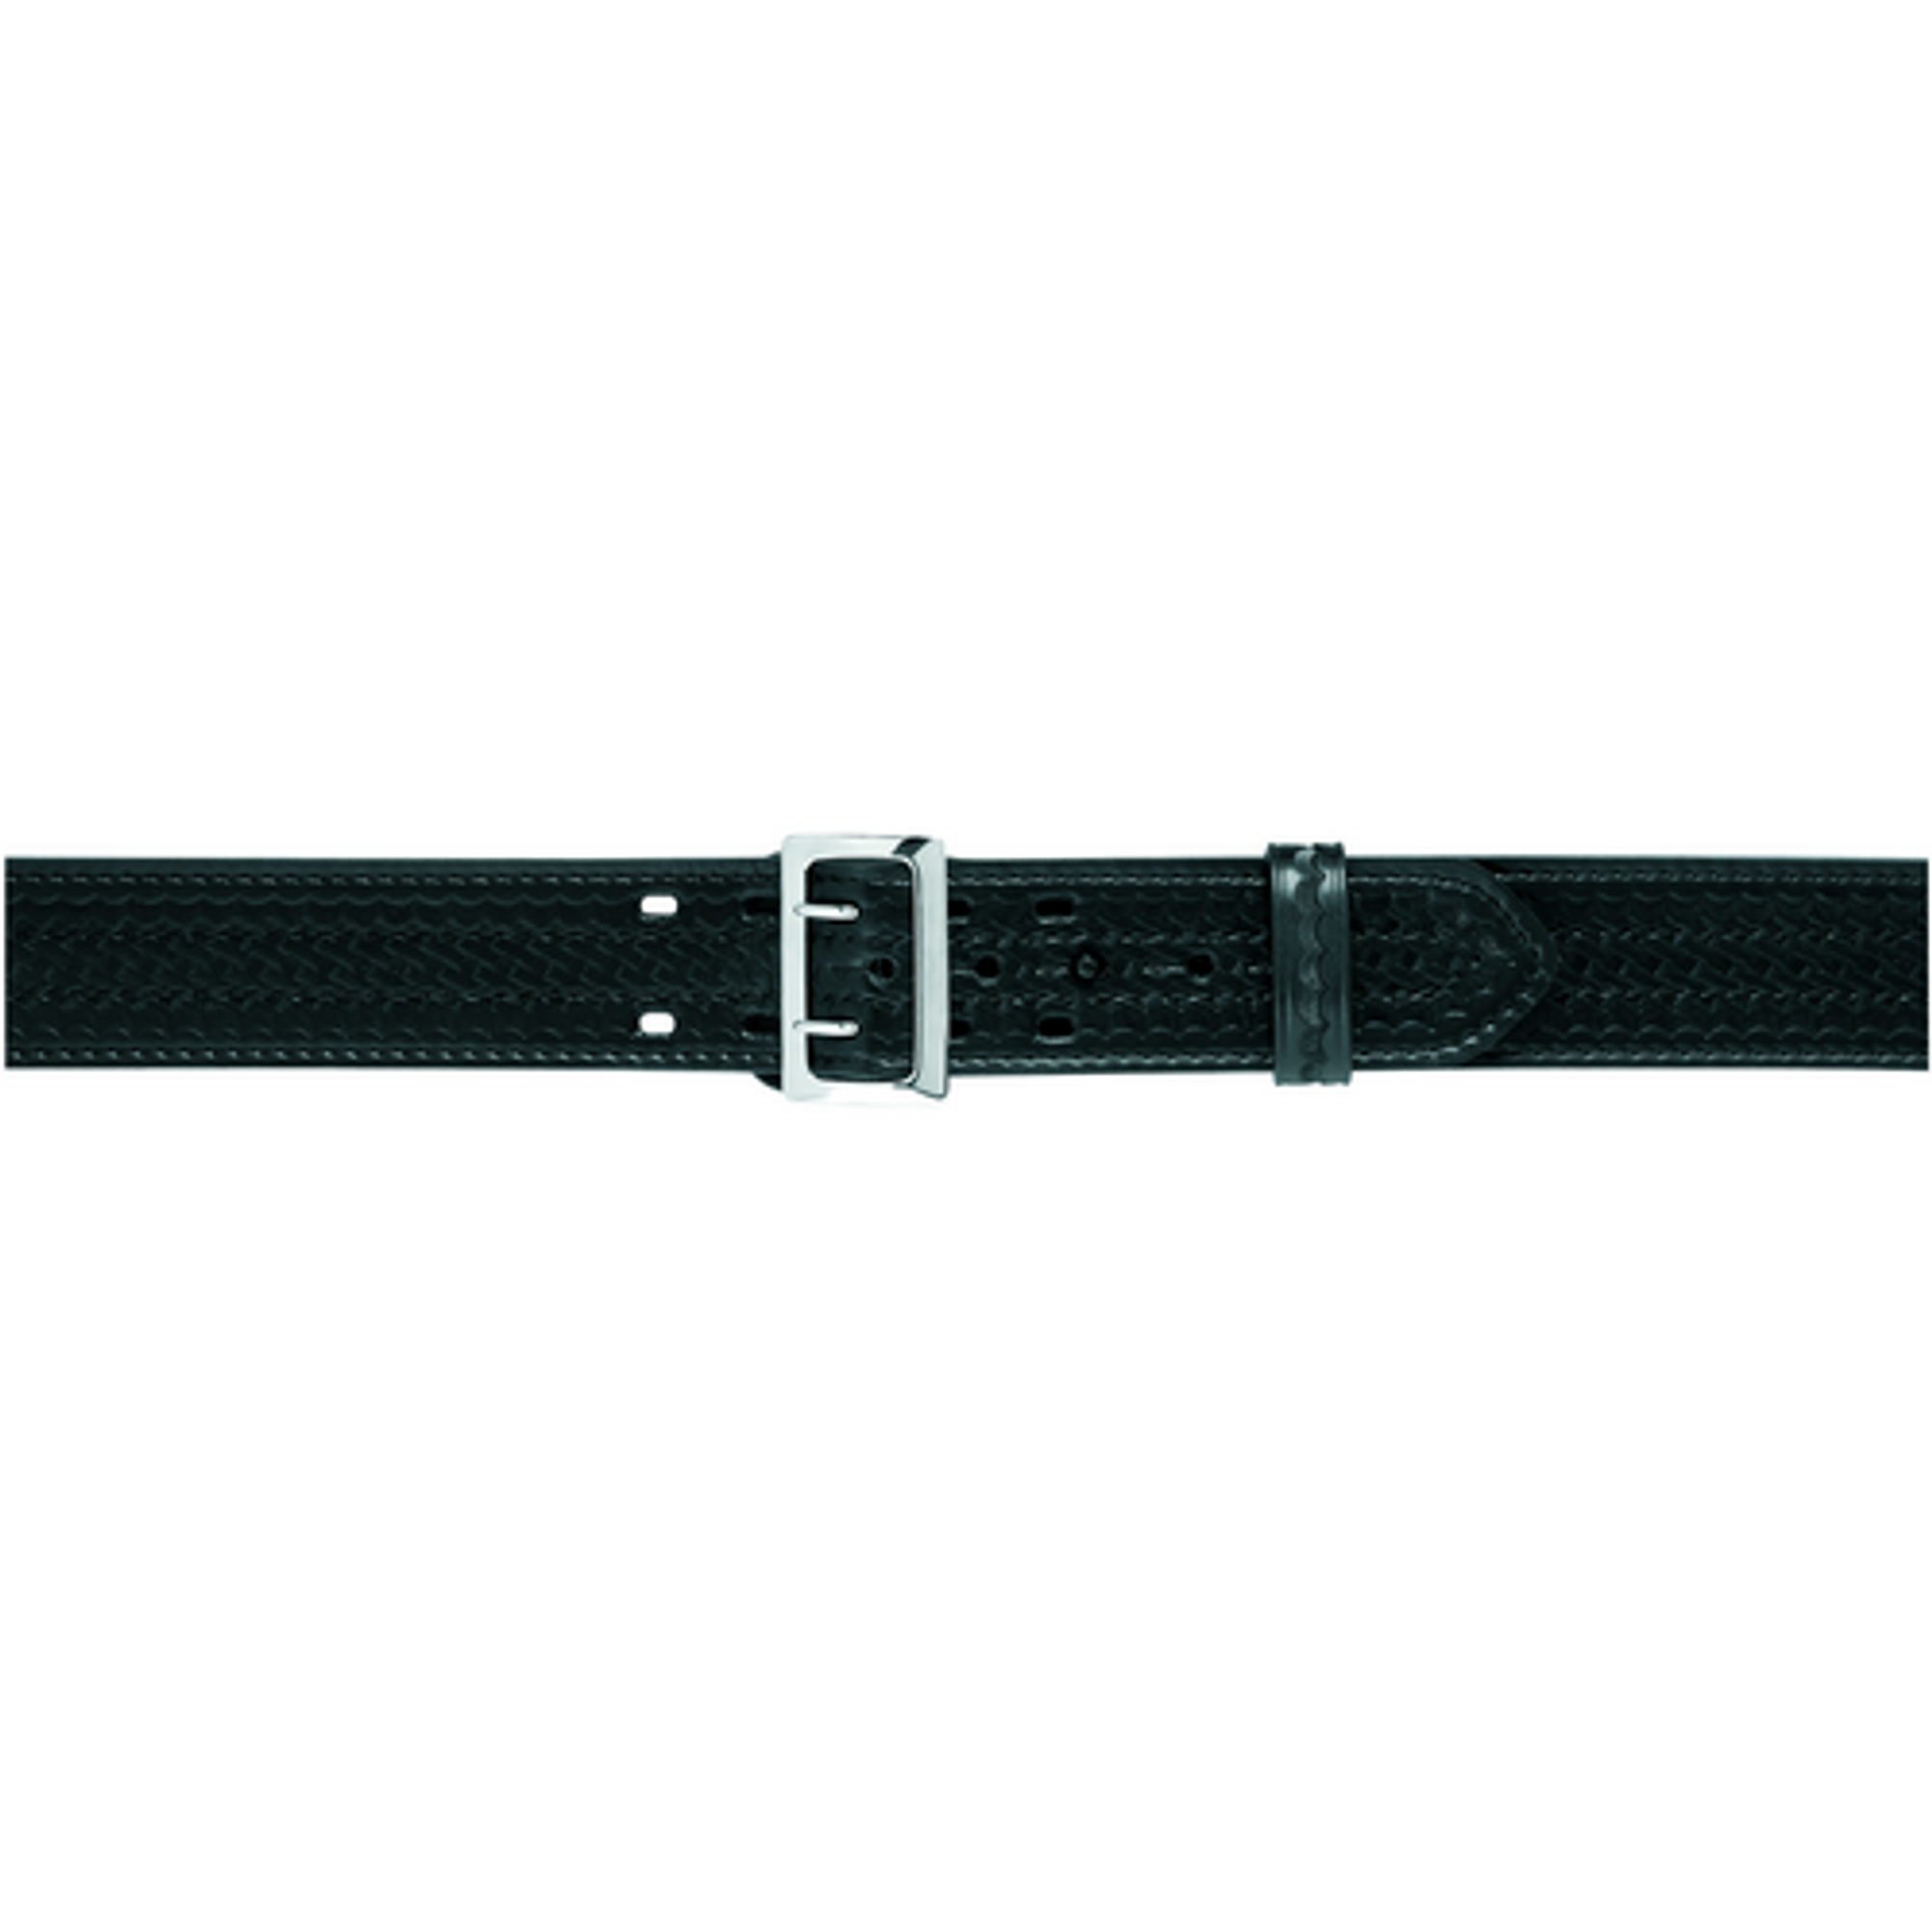 875 - Stitched Edge Sam Browne Duty Belt 2.25 (58mm)